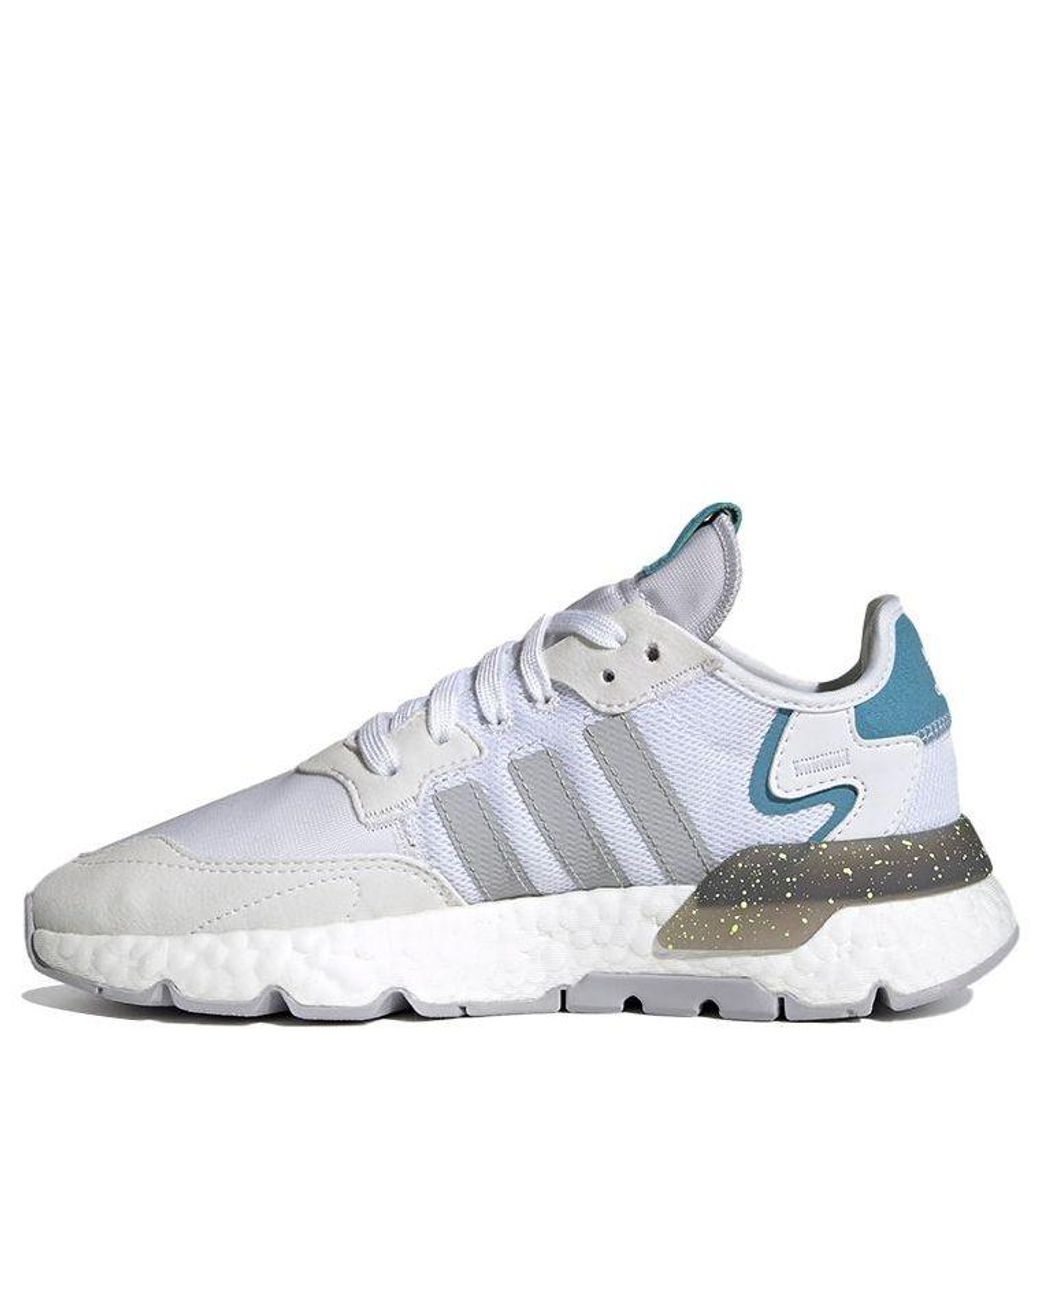 adidas Originals Nite jogger Shoes White/blue | Lyst